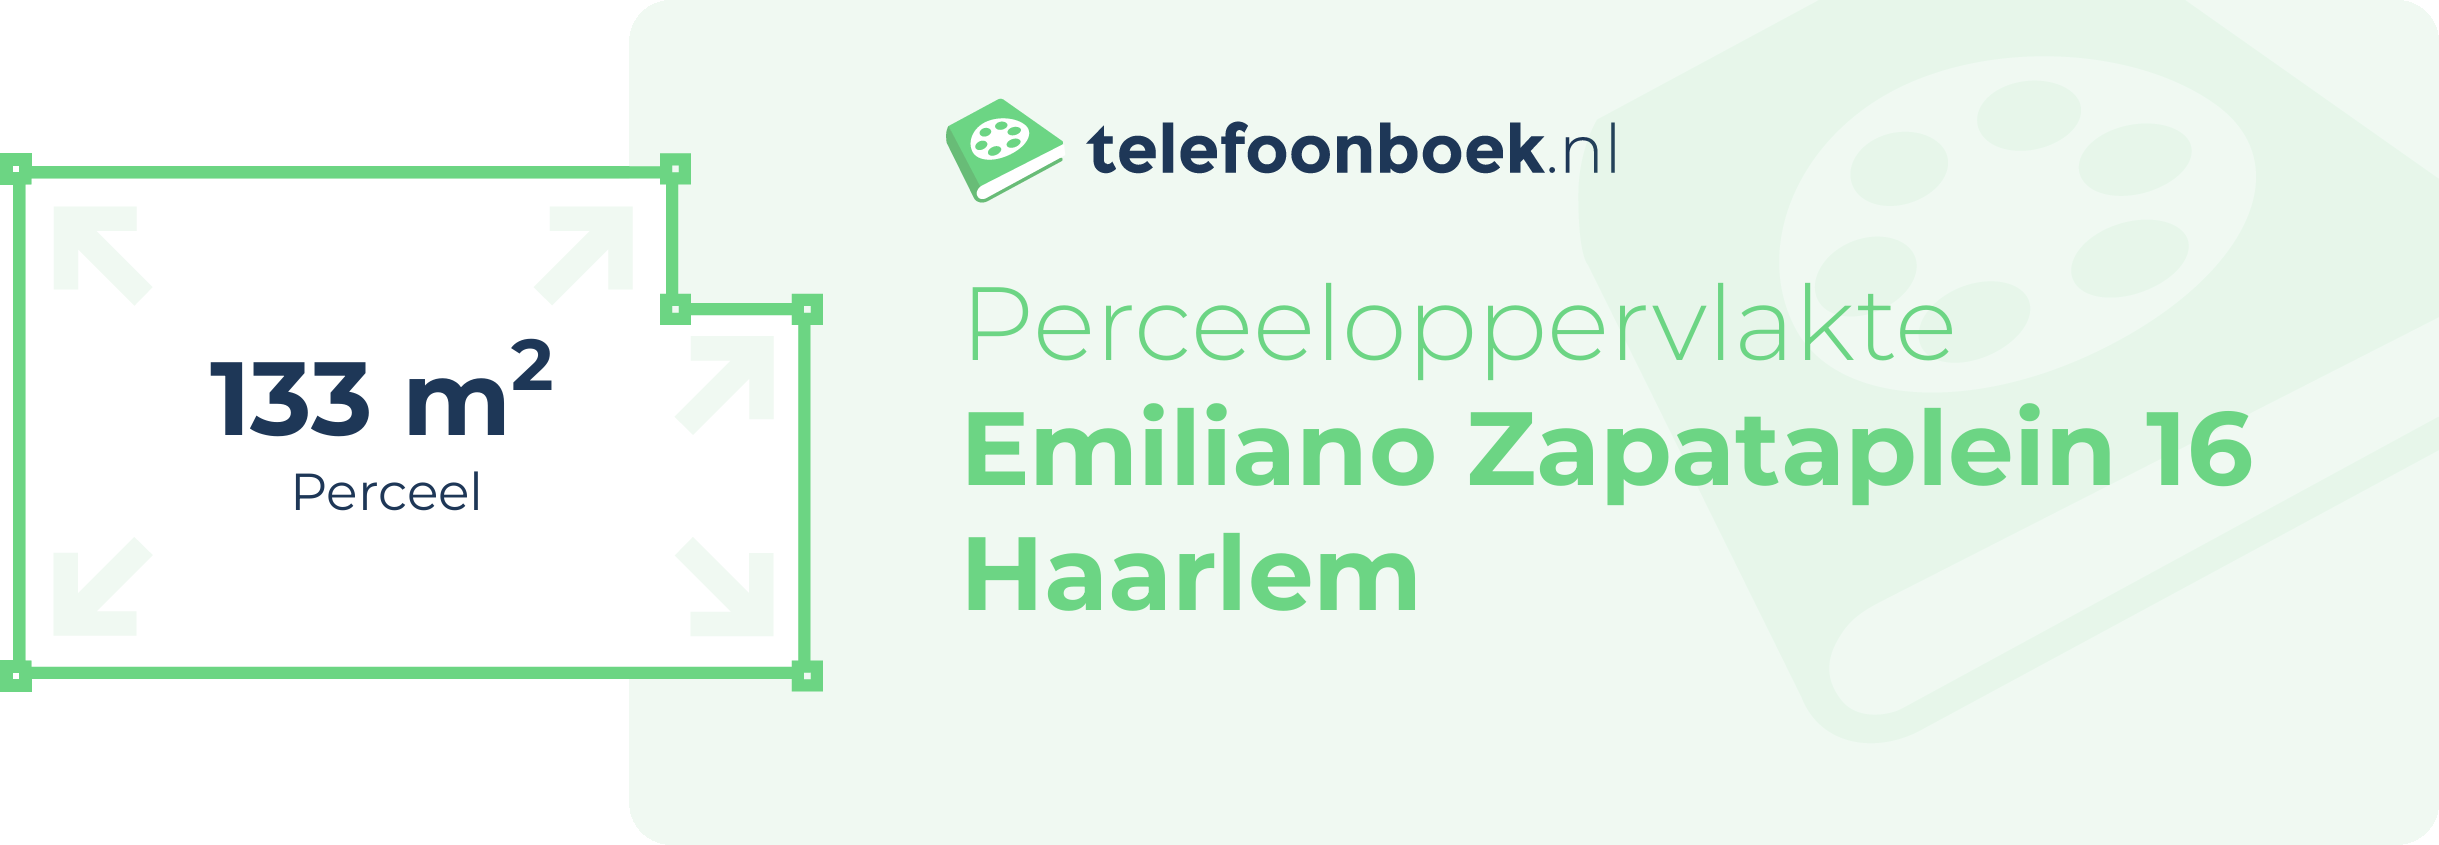 Perceeloppervlakte Emiliano Zapataplein 16 Haarlem